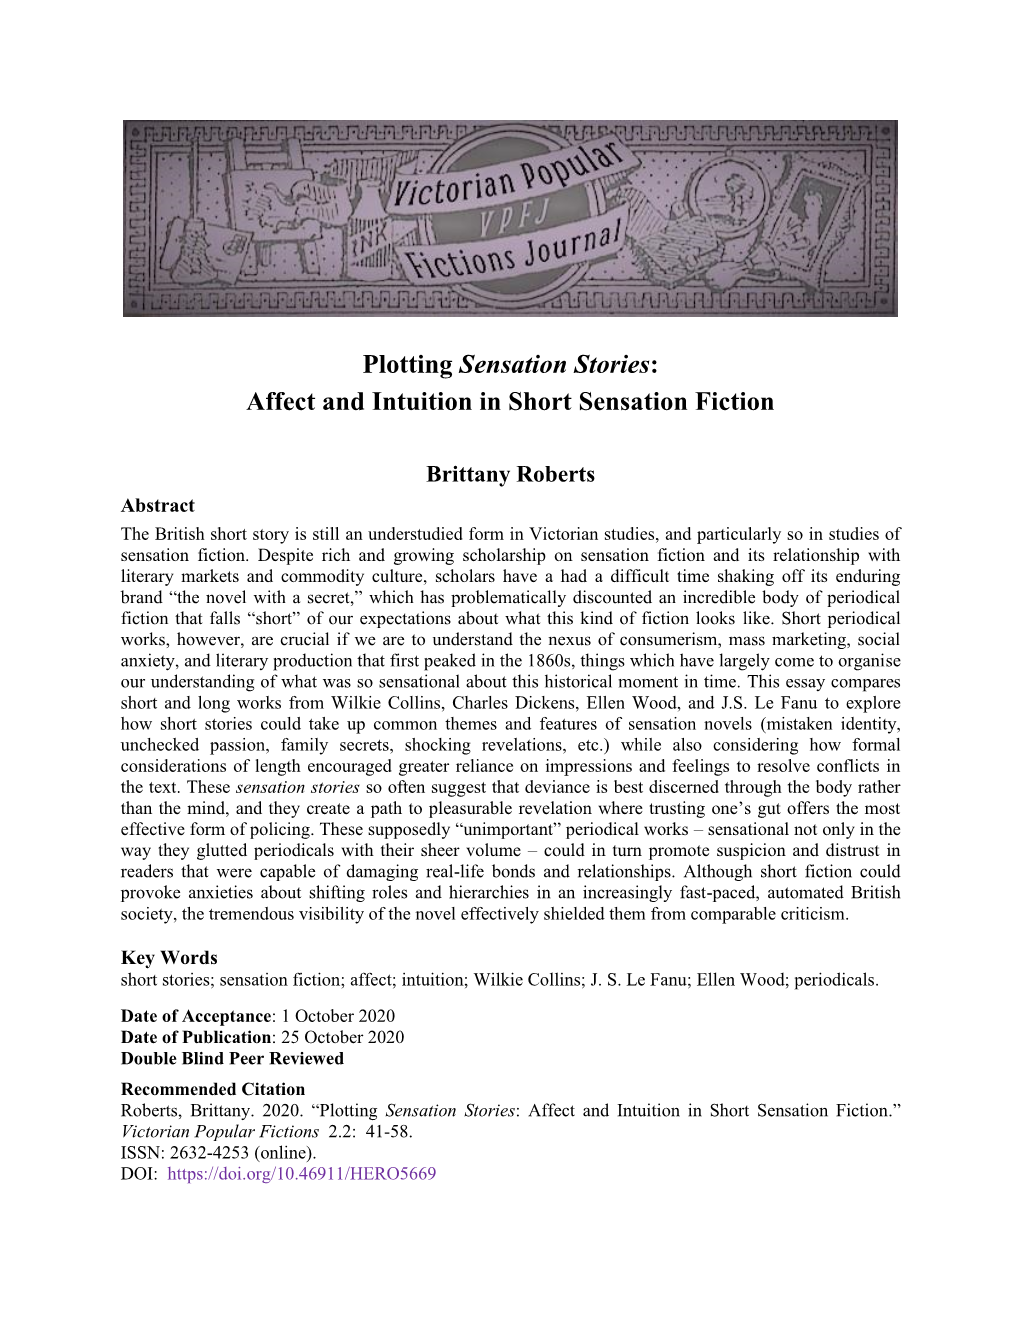 Plotting Sensation Stories: Affect and Intuition in Short Sensation Fiction